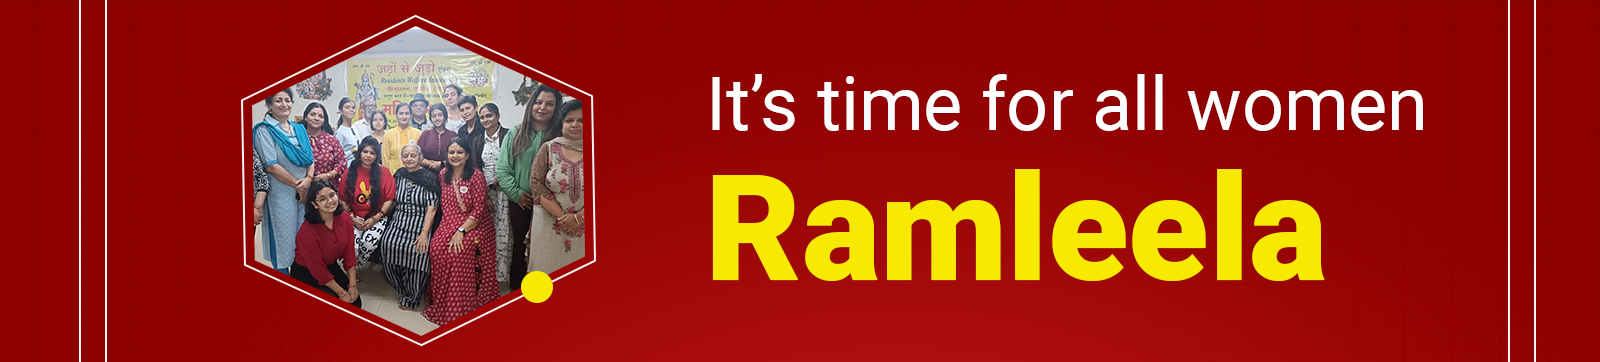 It’s time for all women Ramleela